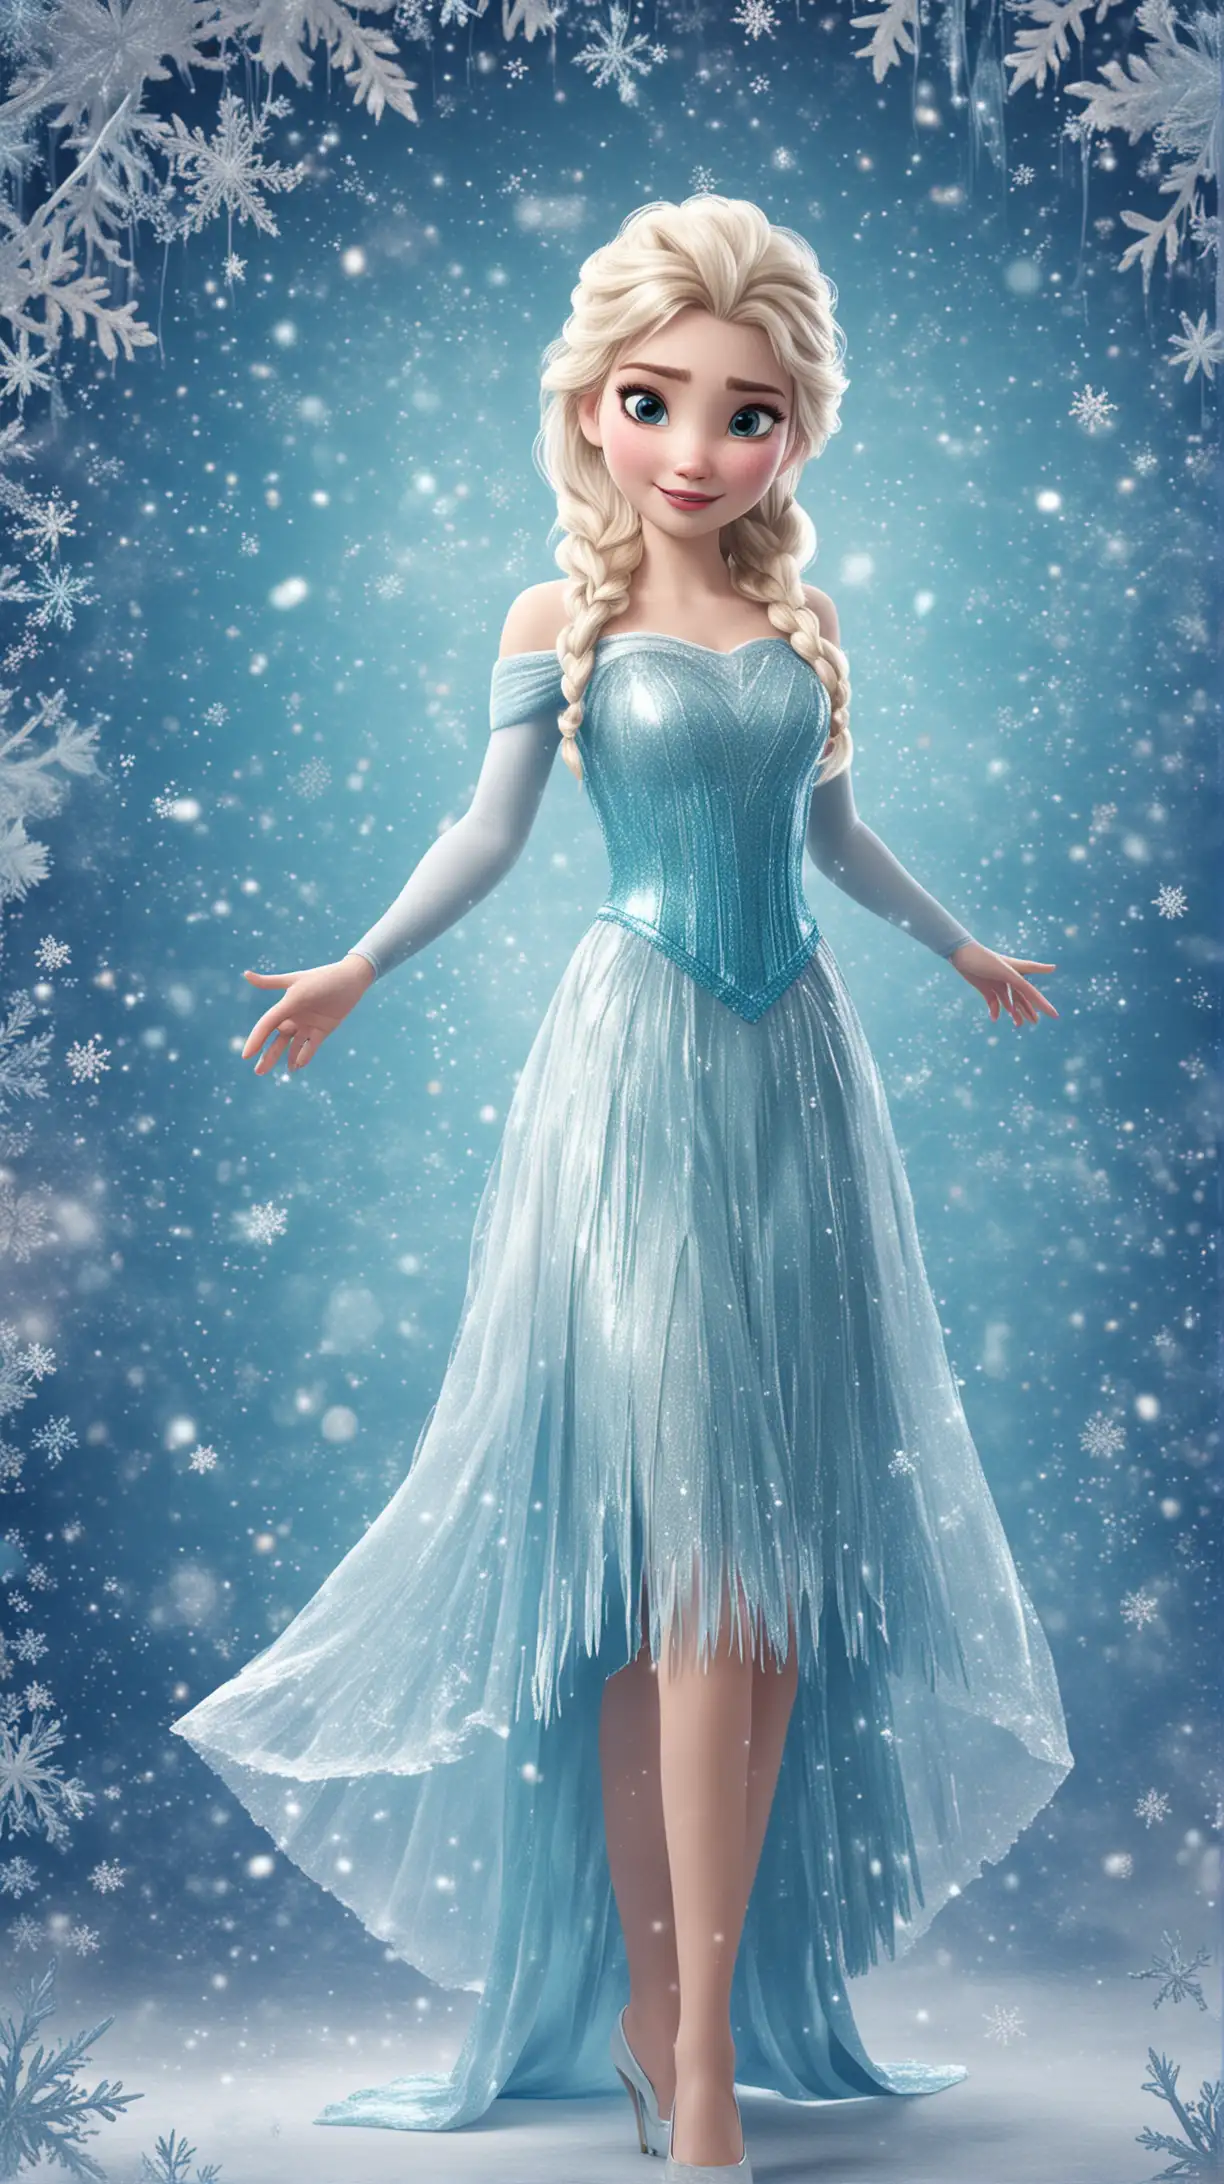 Frozen themed birthday background